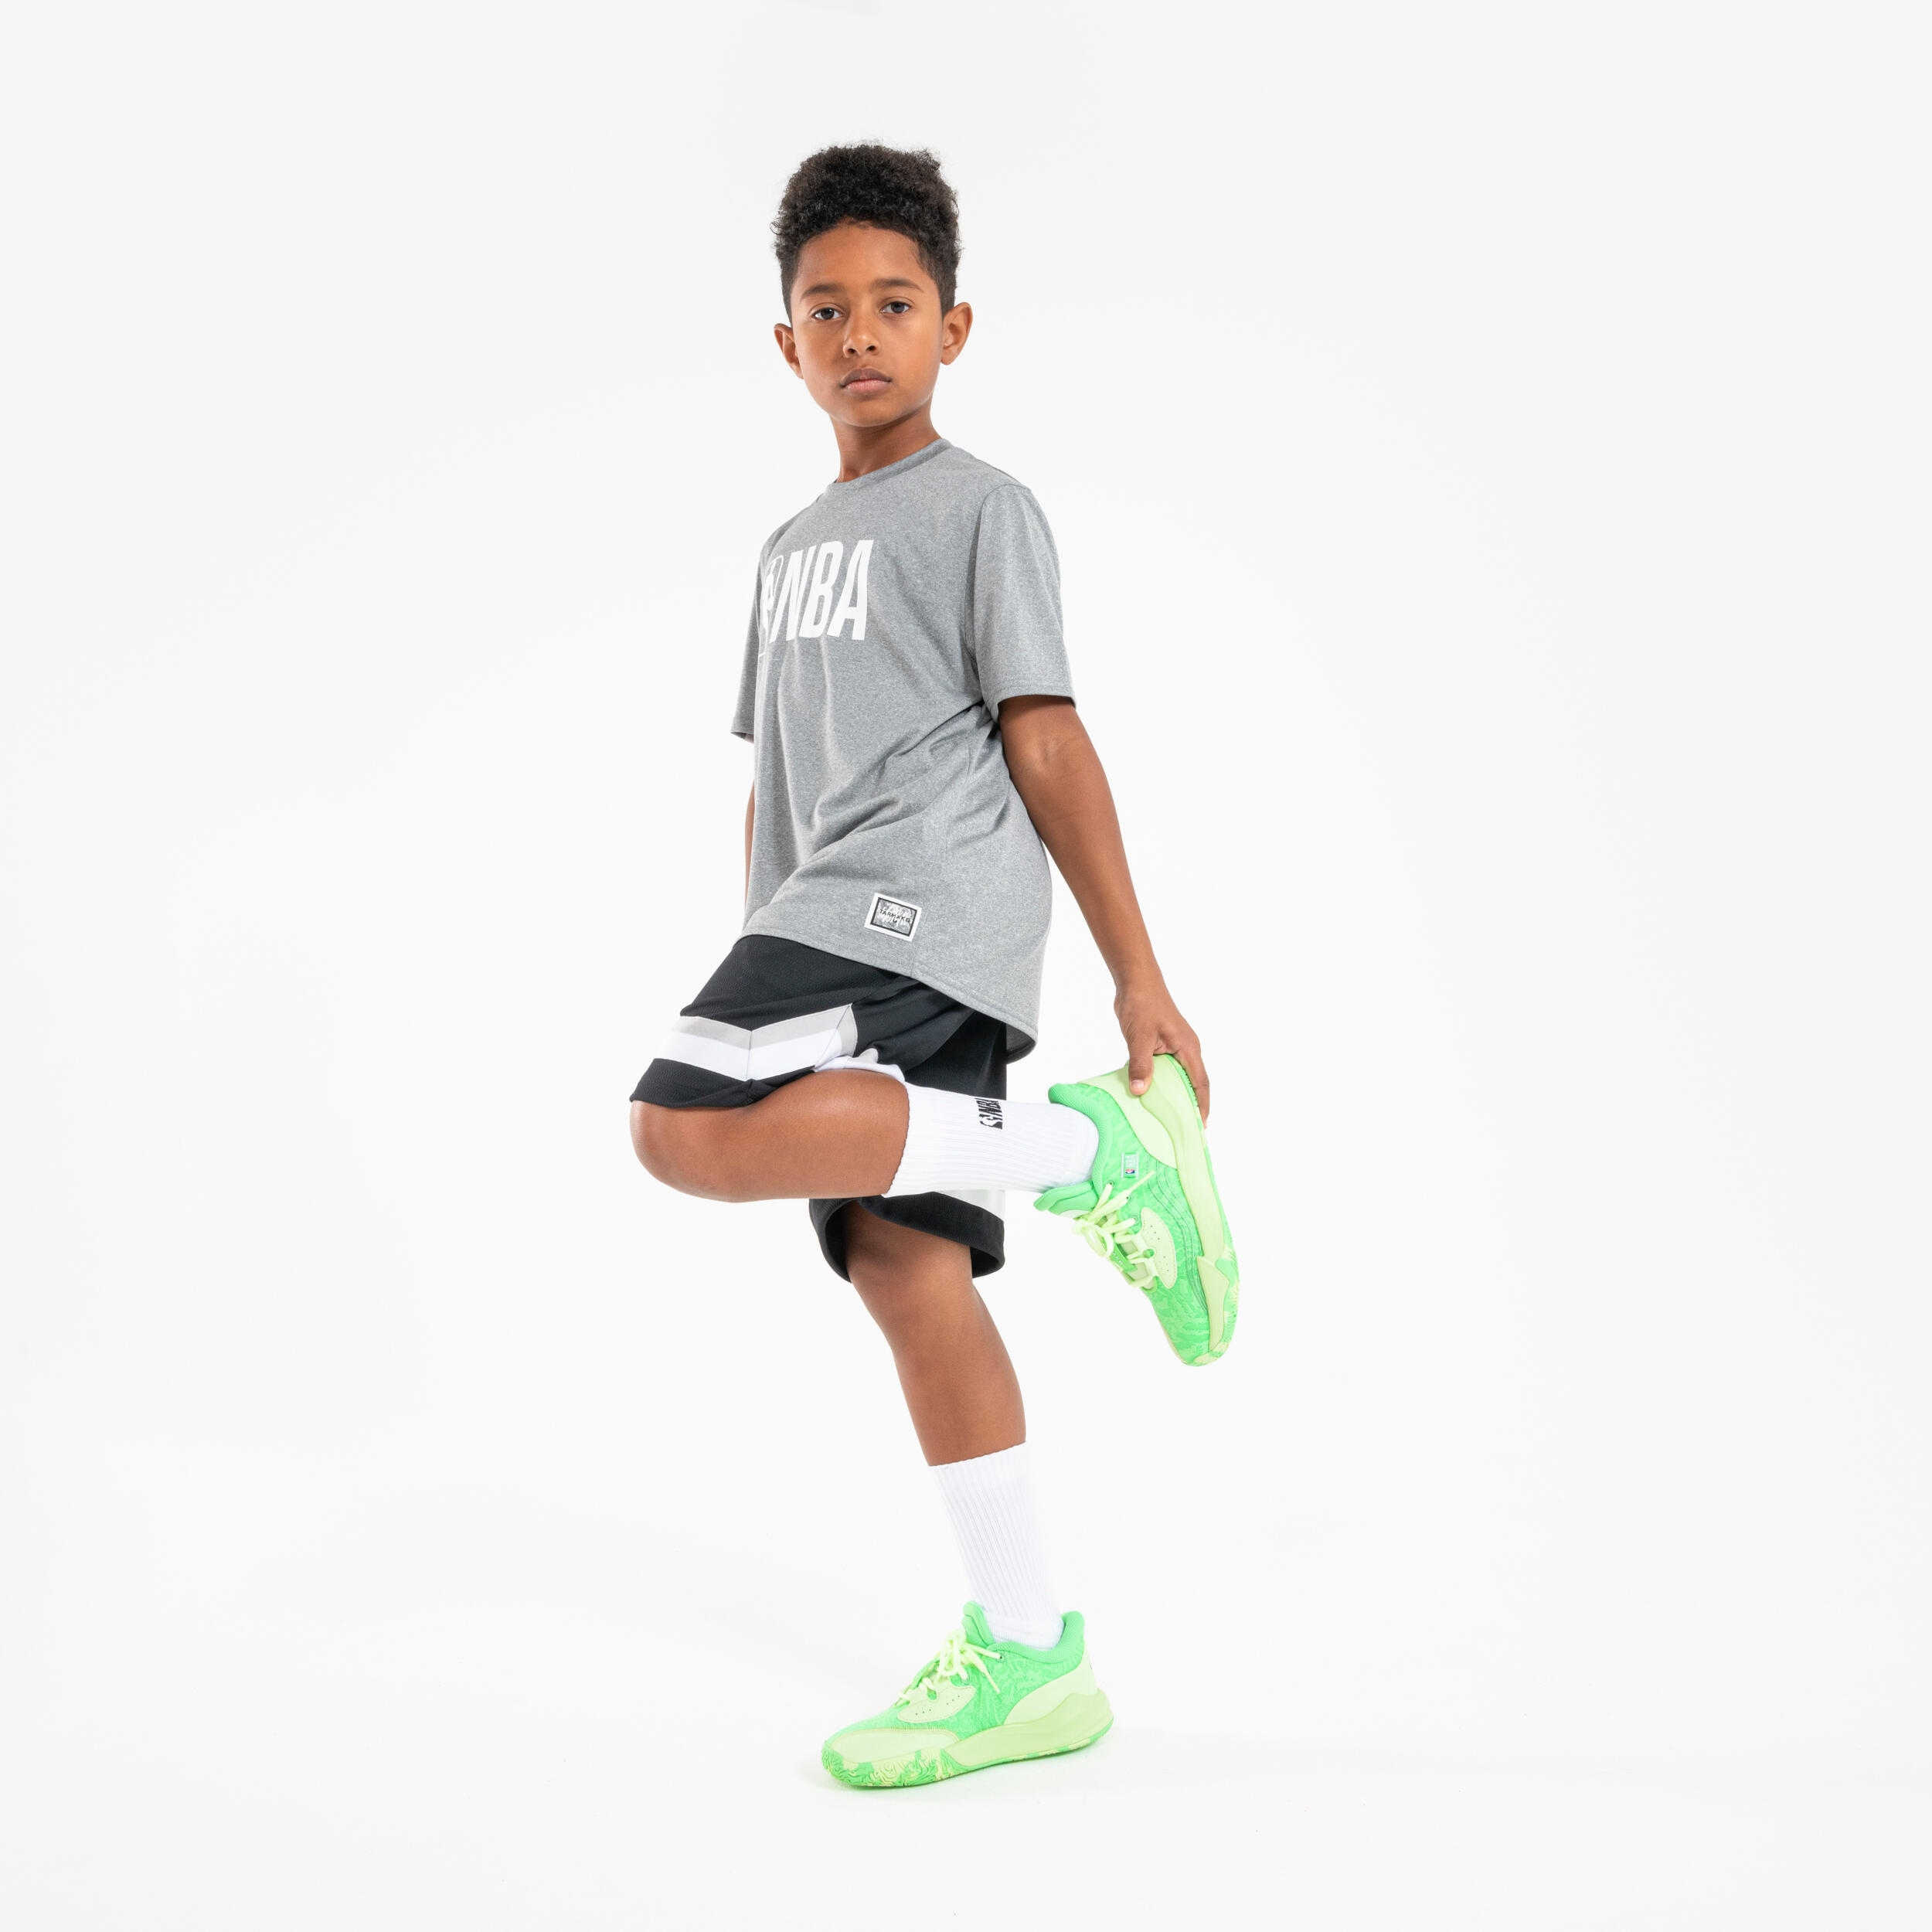 Kids' Basketball Shoes Fast 900 Low-1 - NBA Celtics/Green 2/10